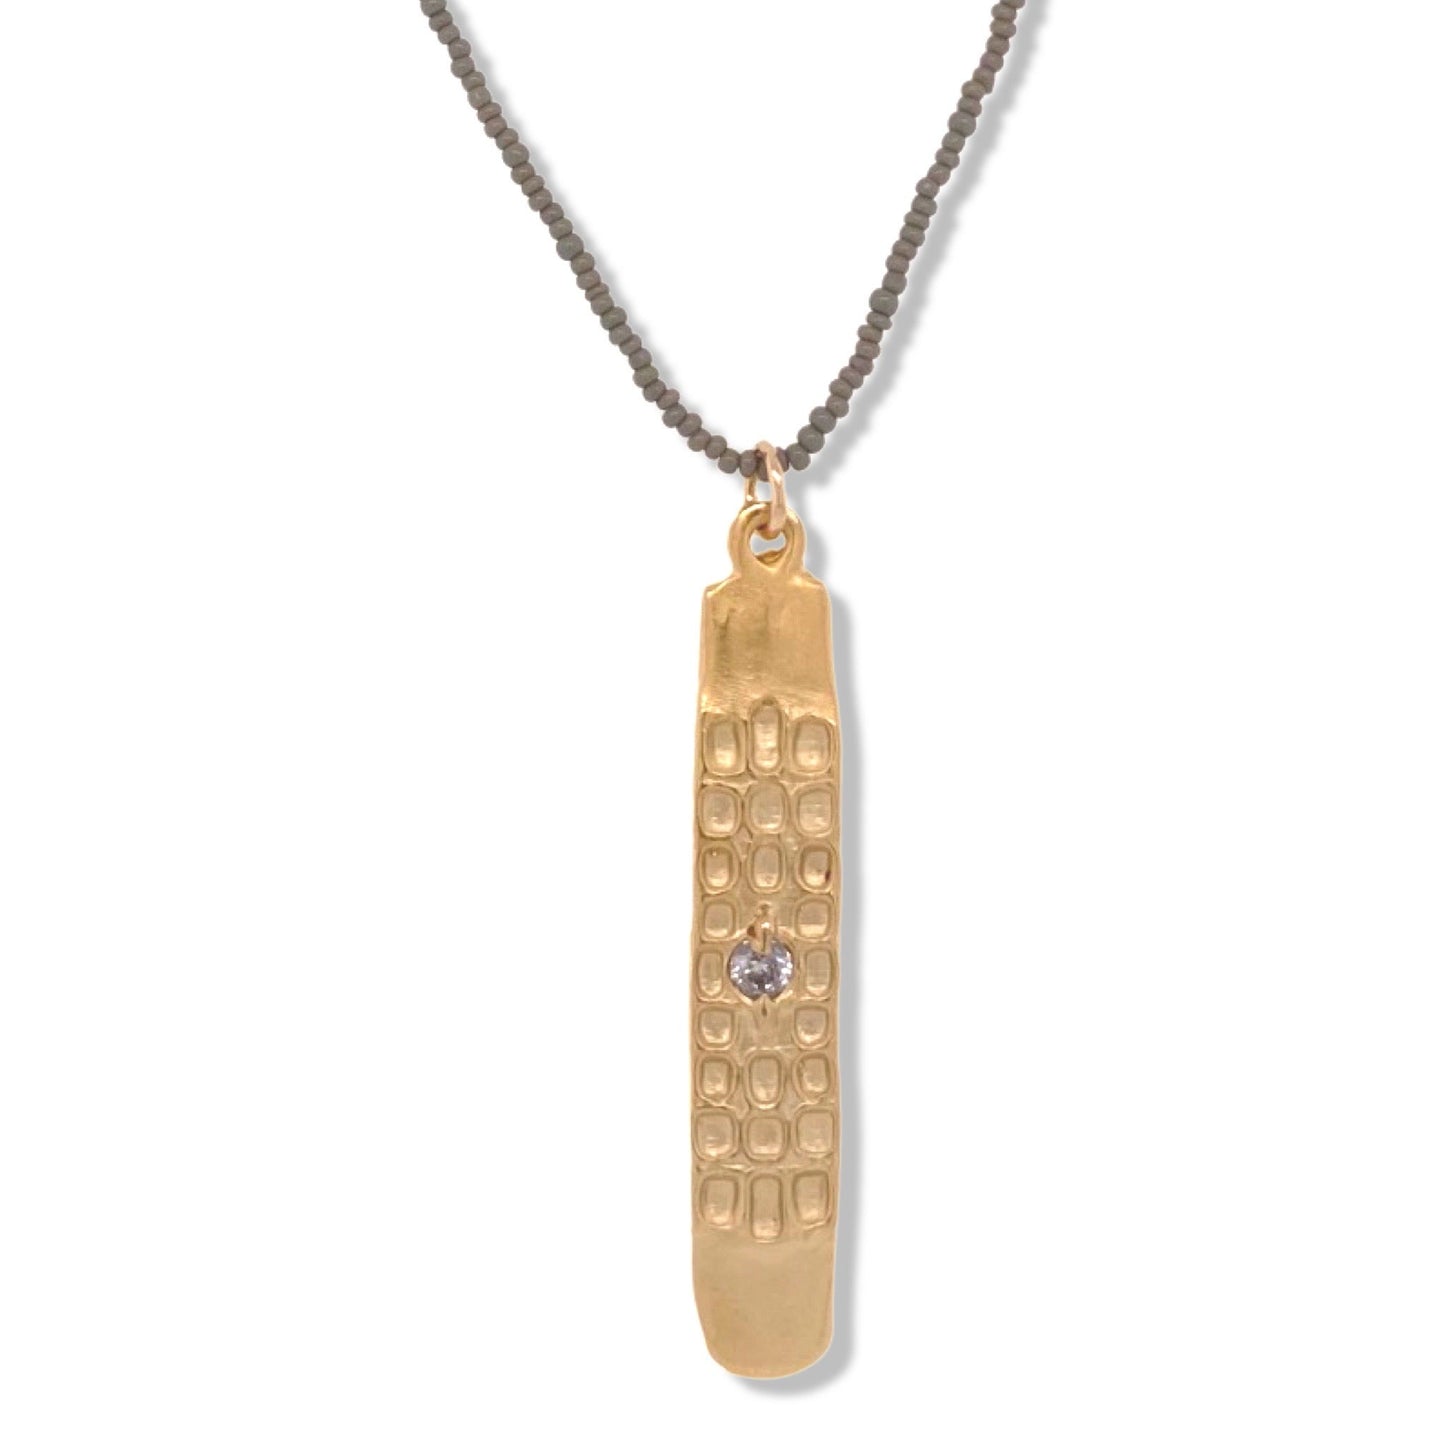 Miya Imprint Necklace in Gold On Charcoal Beads | Nalu | Nantucket